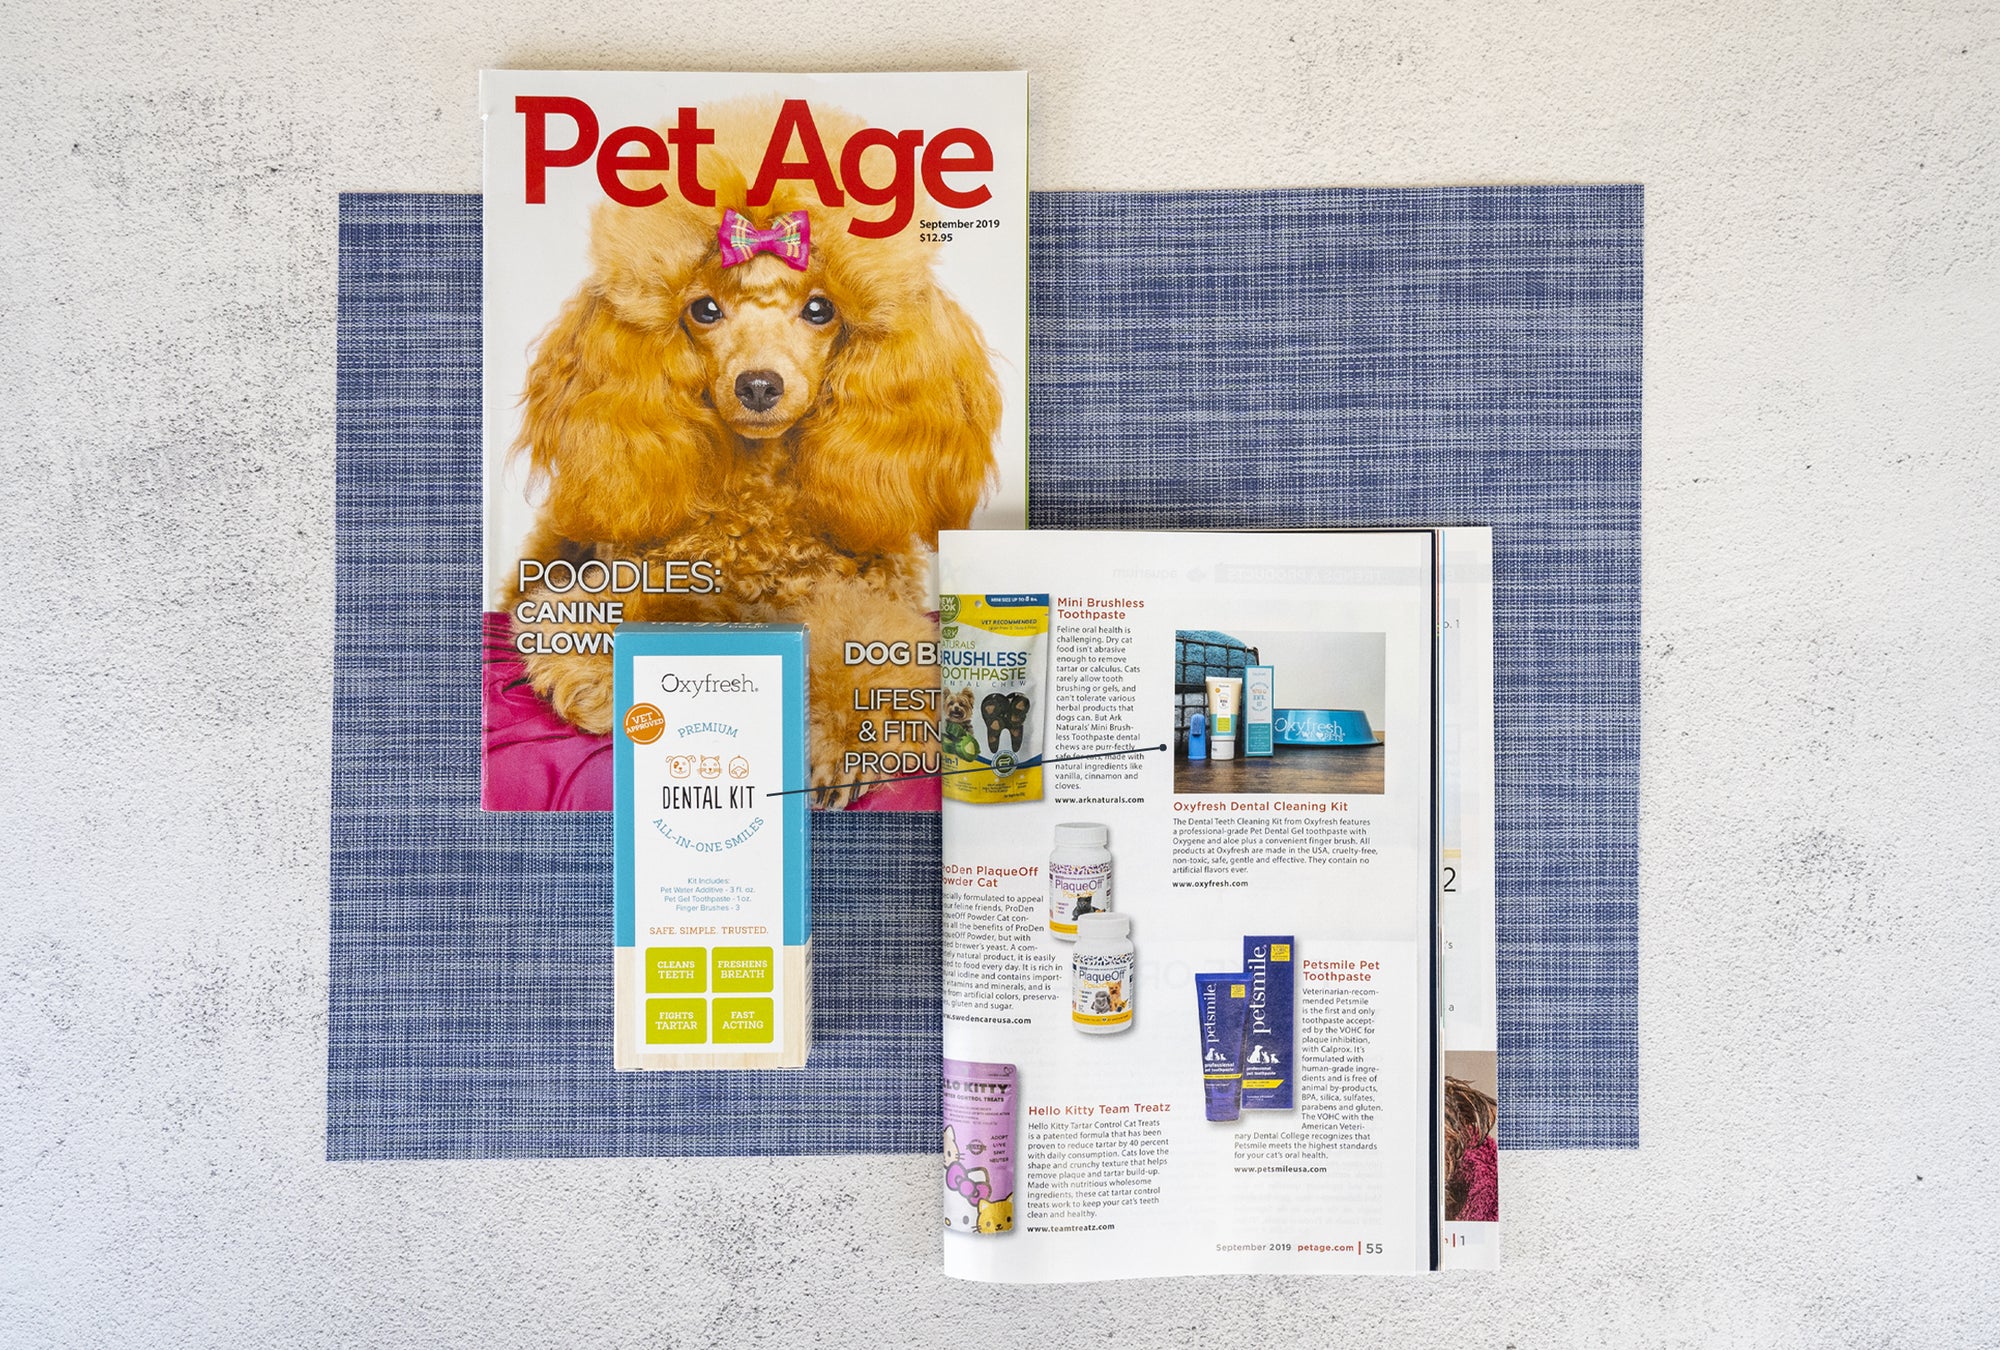 oxyfresh pet dental kit next to article in Pet Age magazine